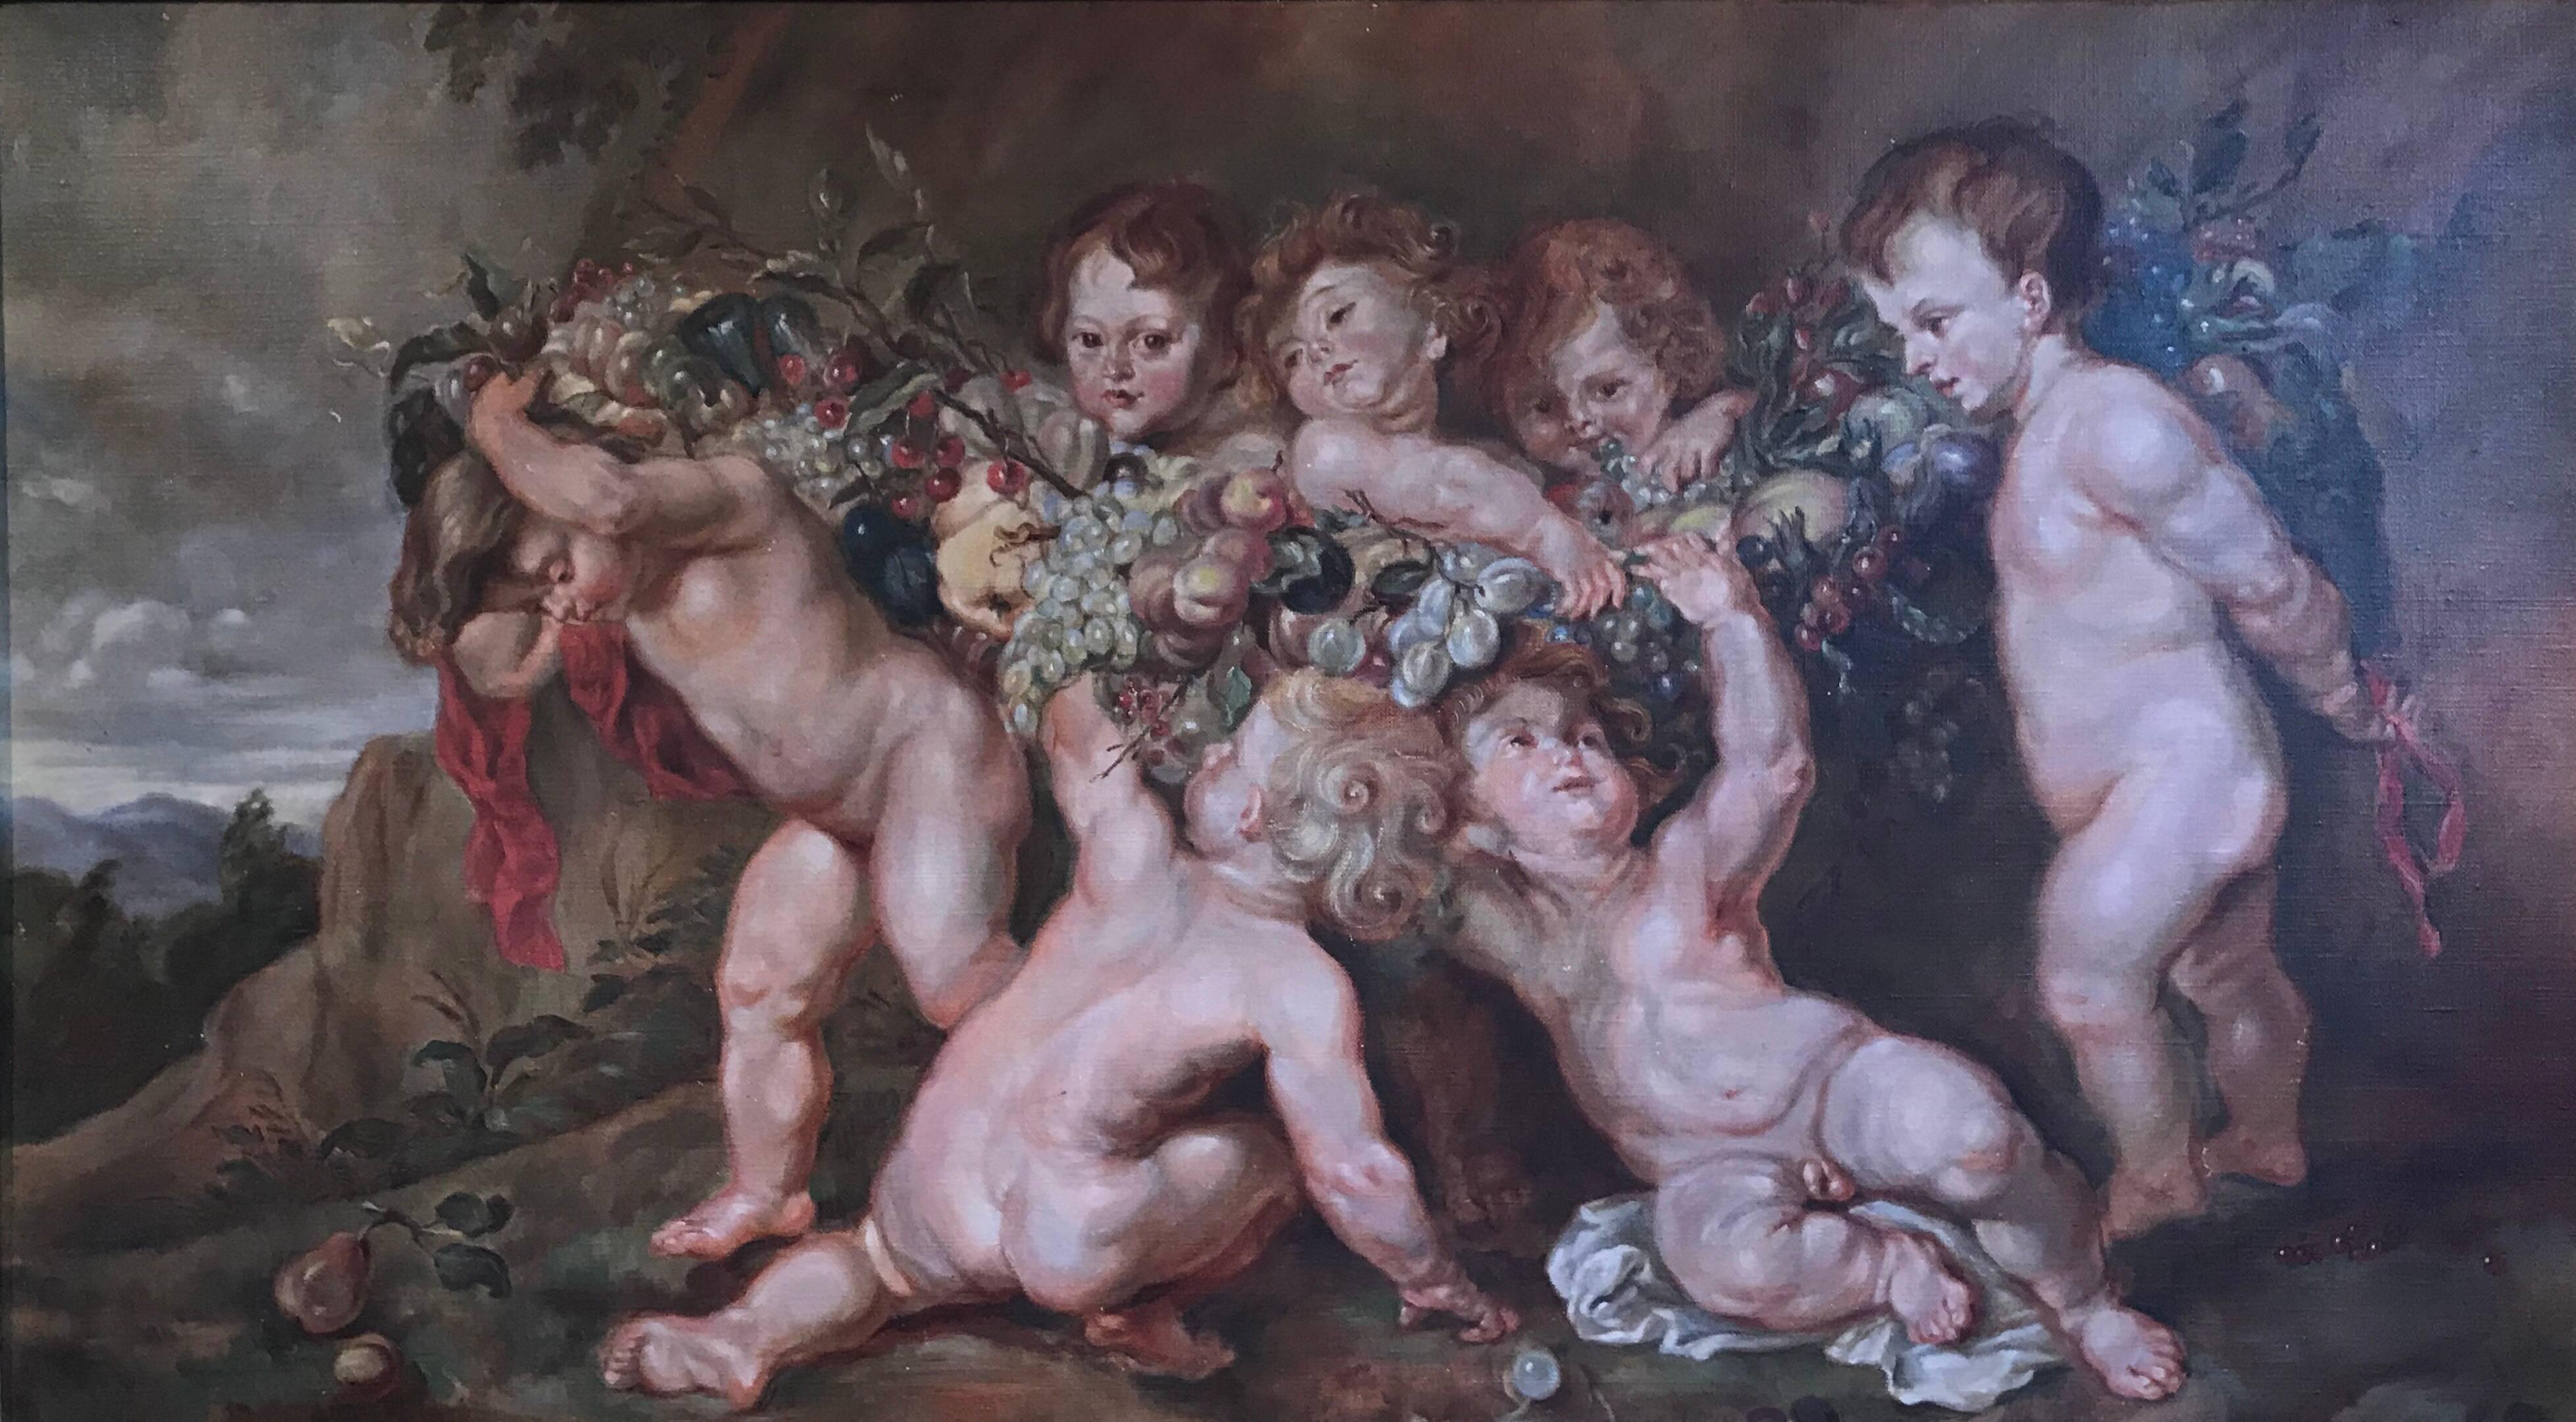 Unknown Nude Painting – Antikes Ölgemälde, Sehr große Bacchanisches Rokoko-Szene, Amors spielen